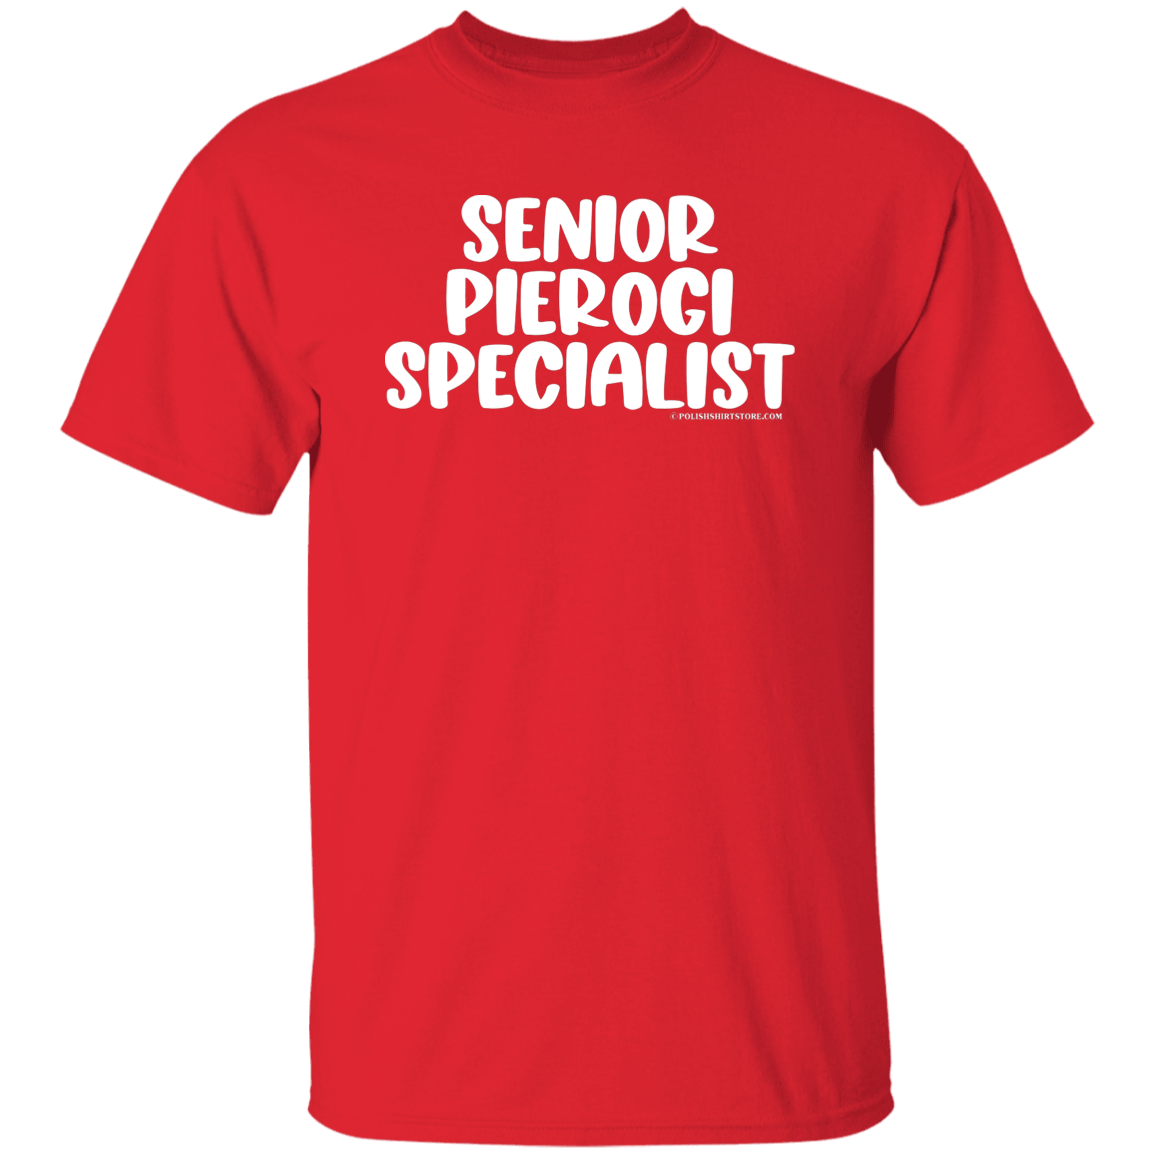 Senior Pierogi Specialist Apparel CustomCat G500 5.3 oz. T-Shirt Red S